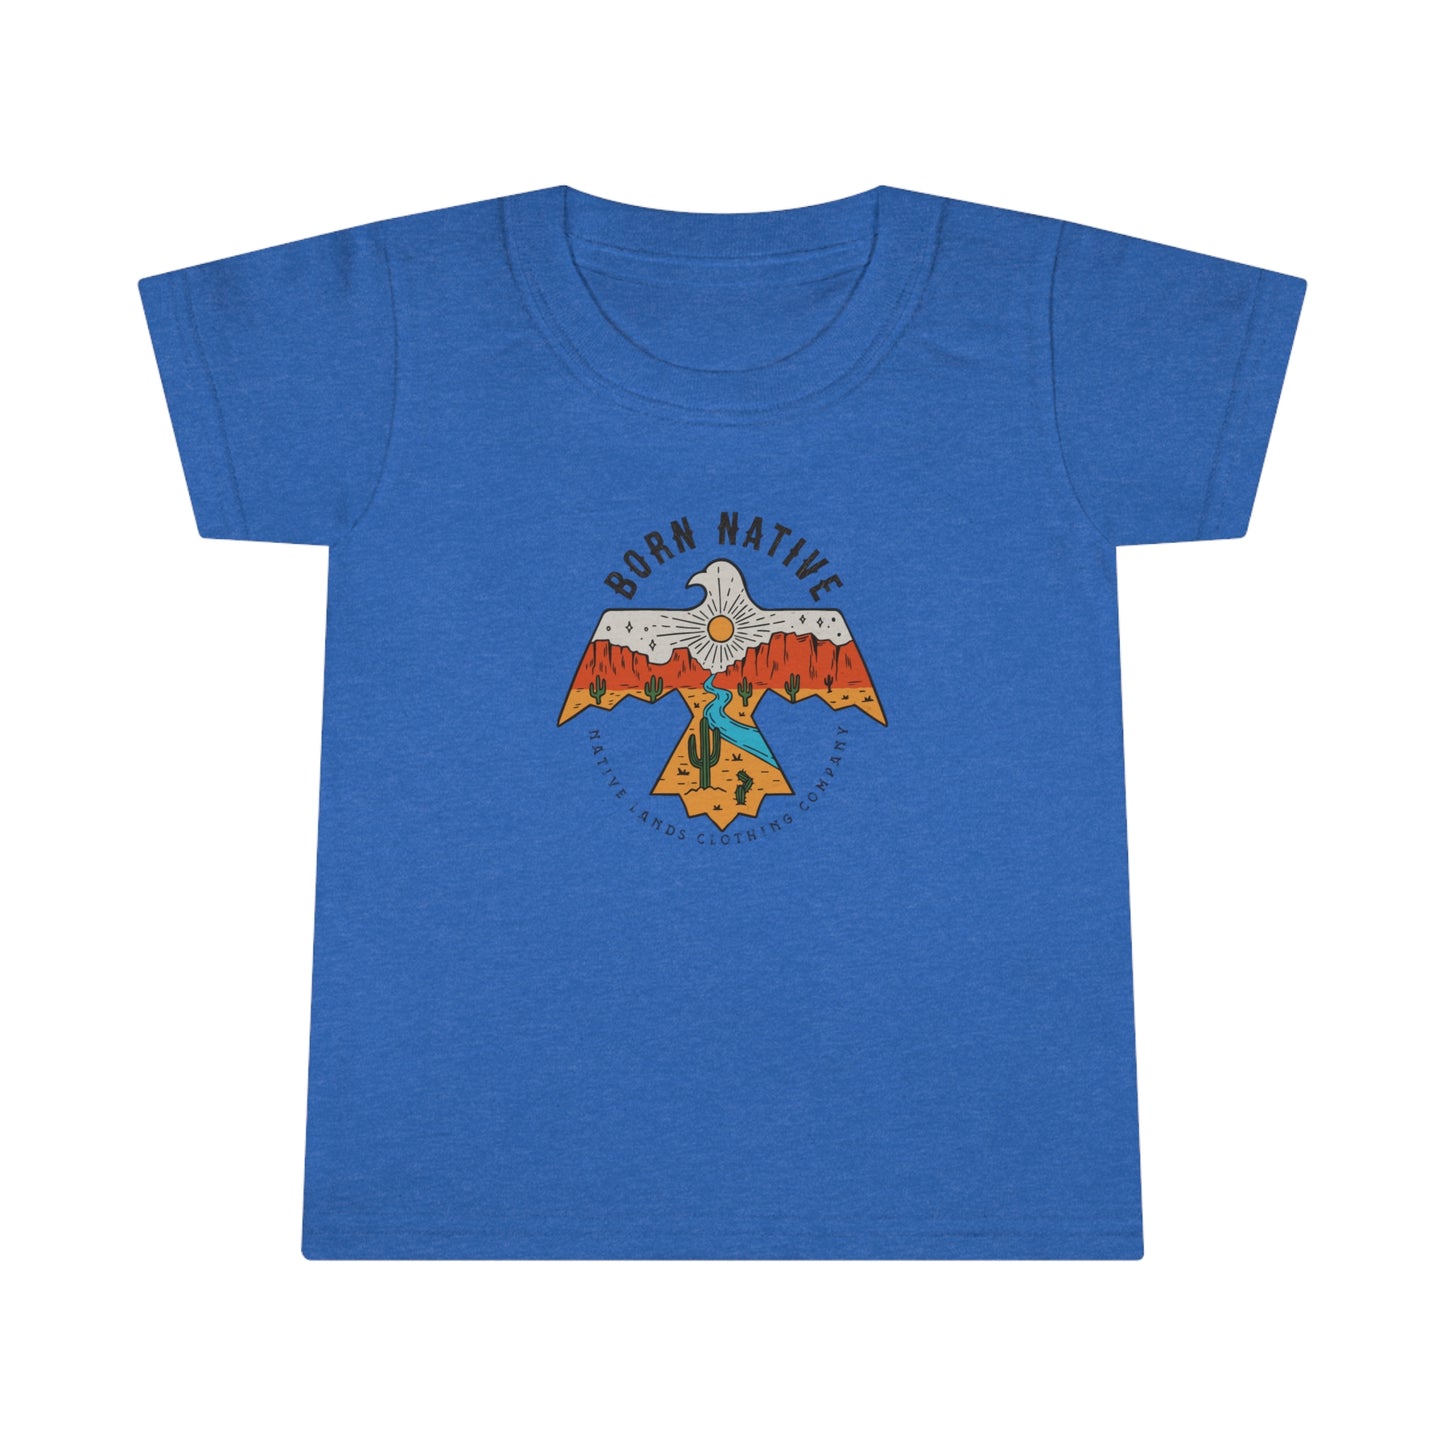 Camisa Thunderbird para niños pequeños Algodón Nativo americano